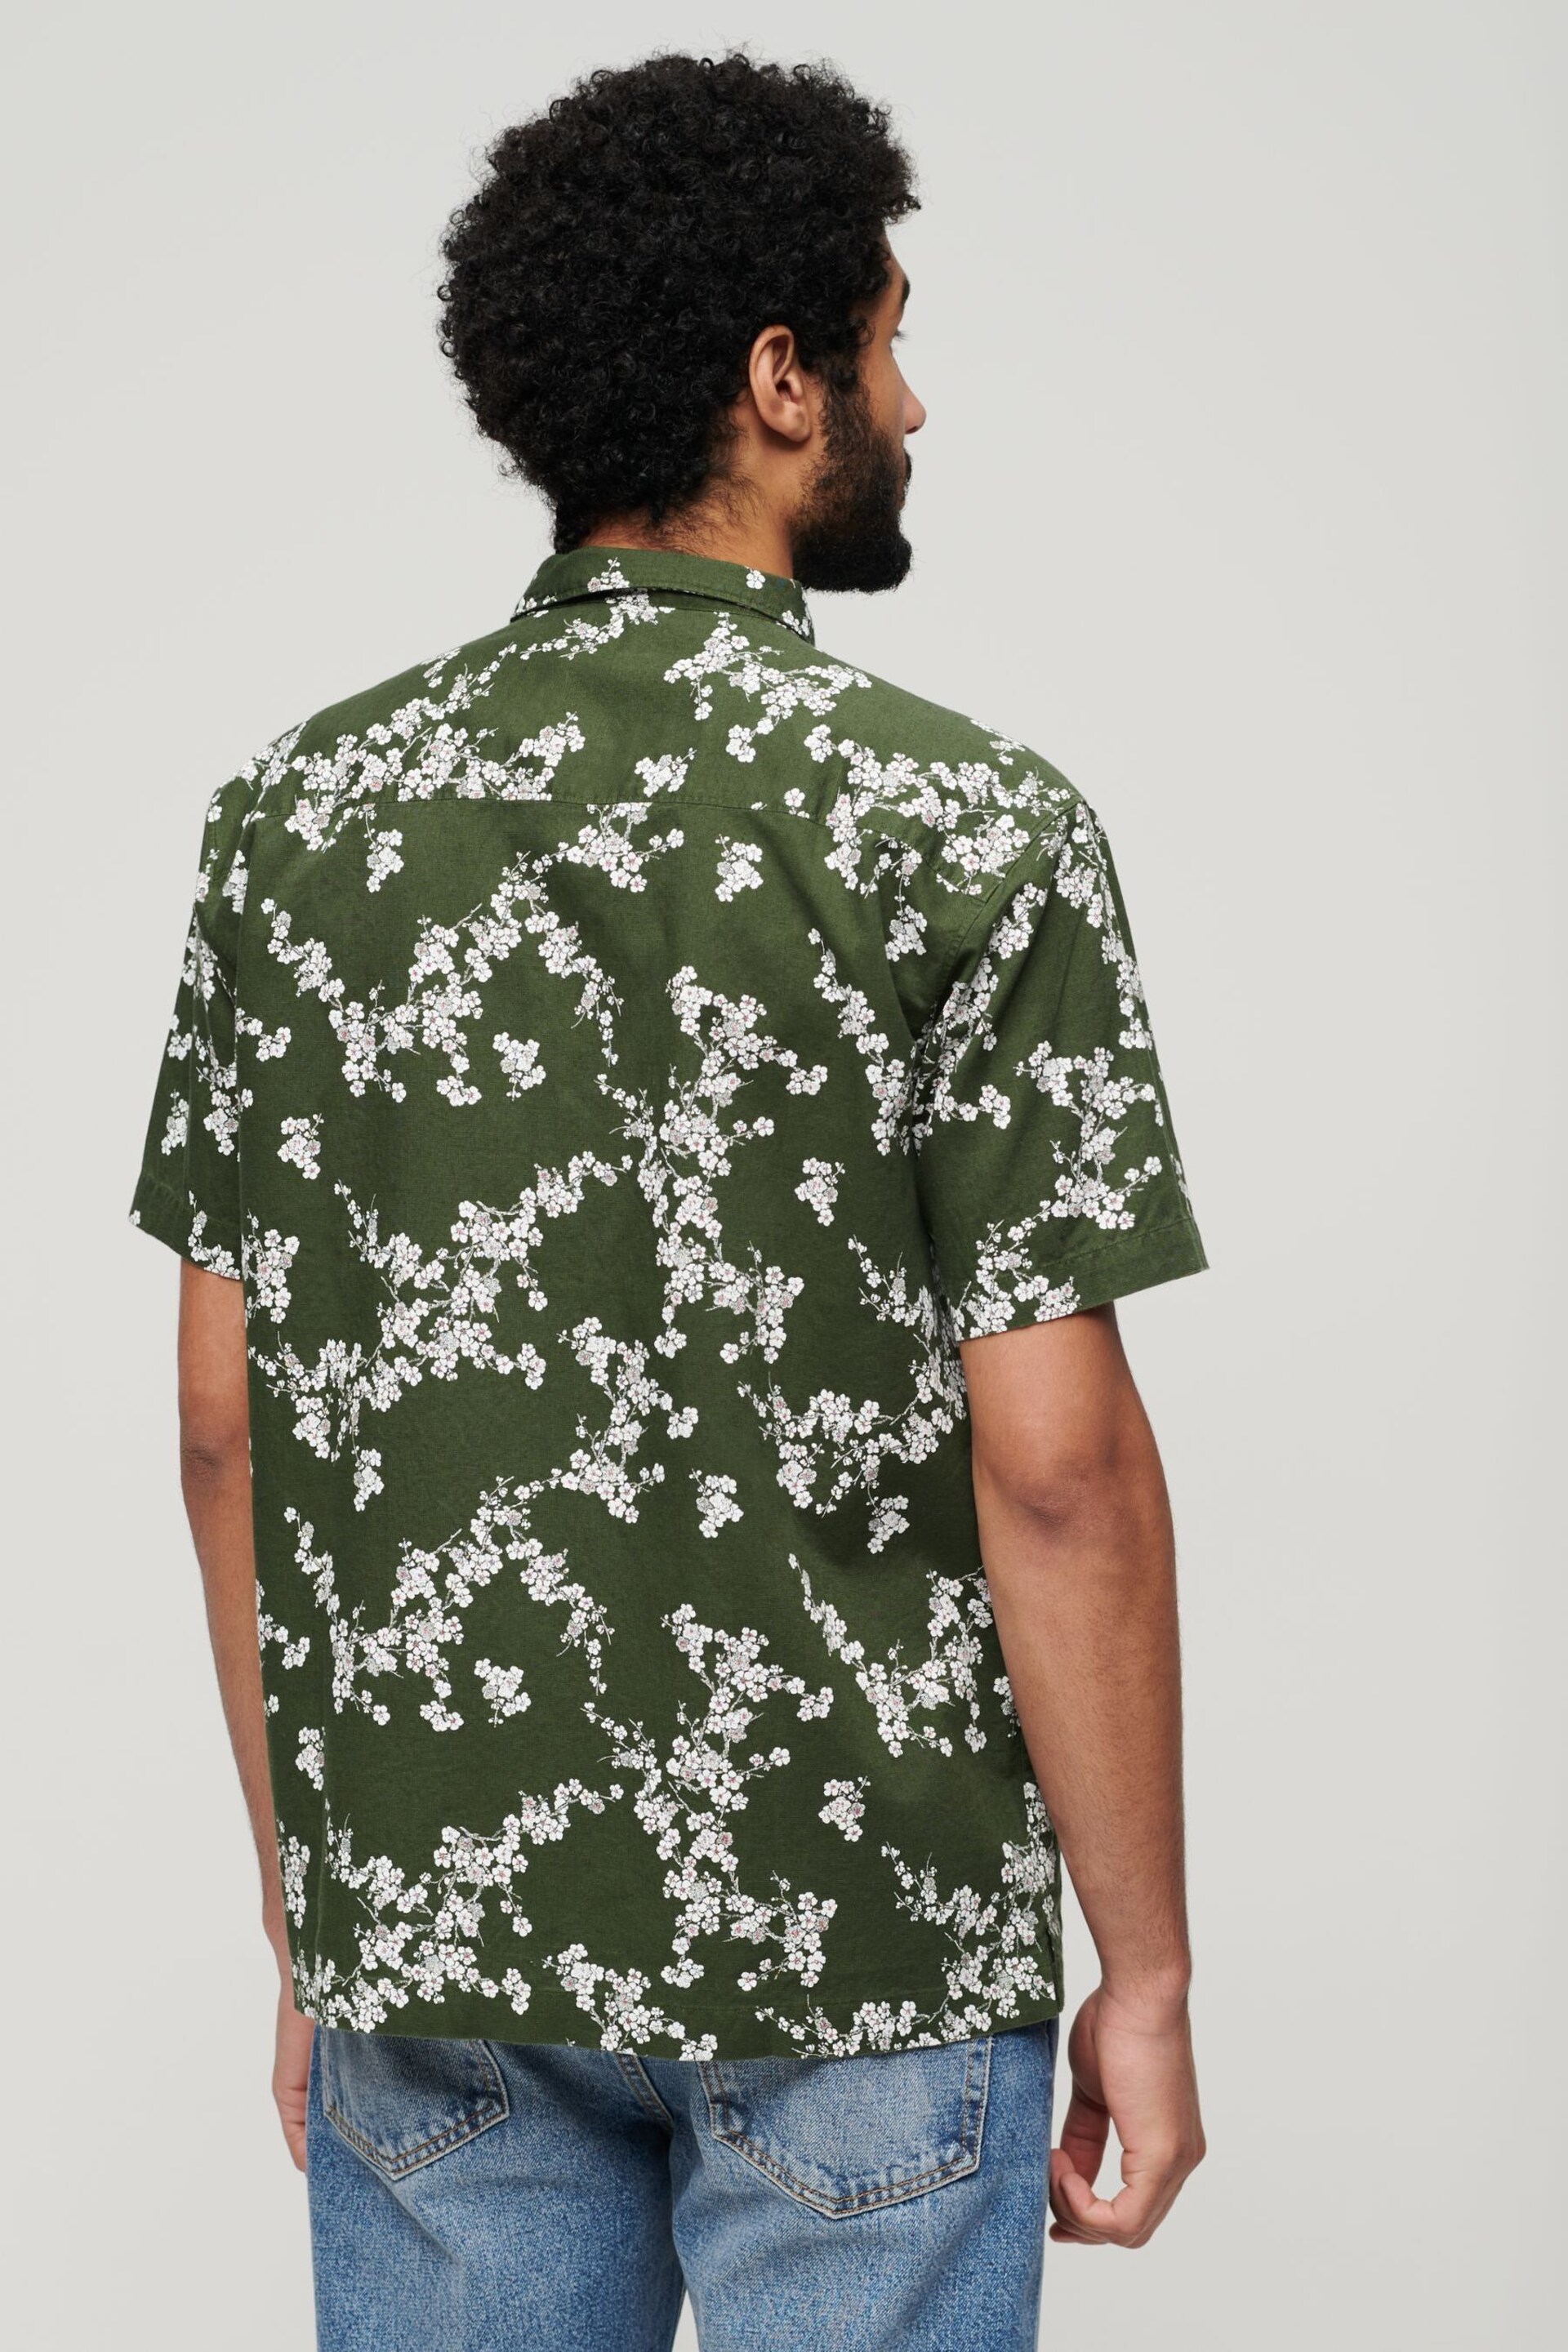 Superdry Green Short Sleeved Beach Shirt - Image 2 of 6